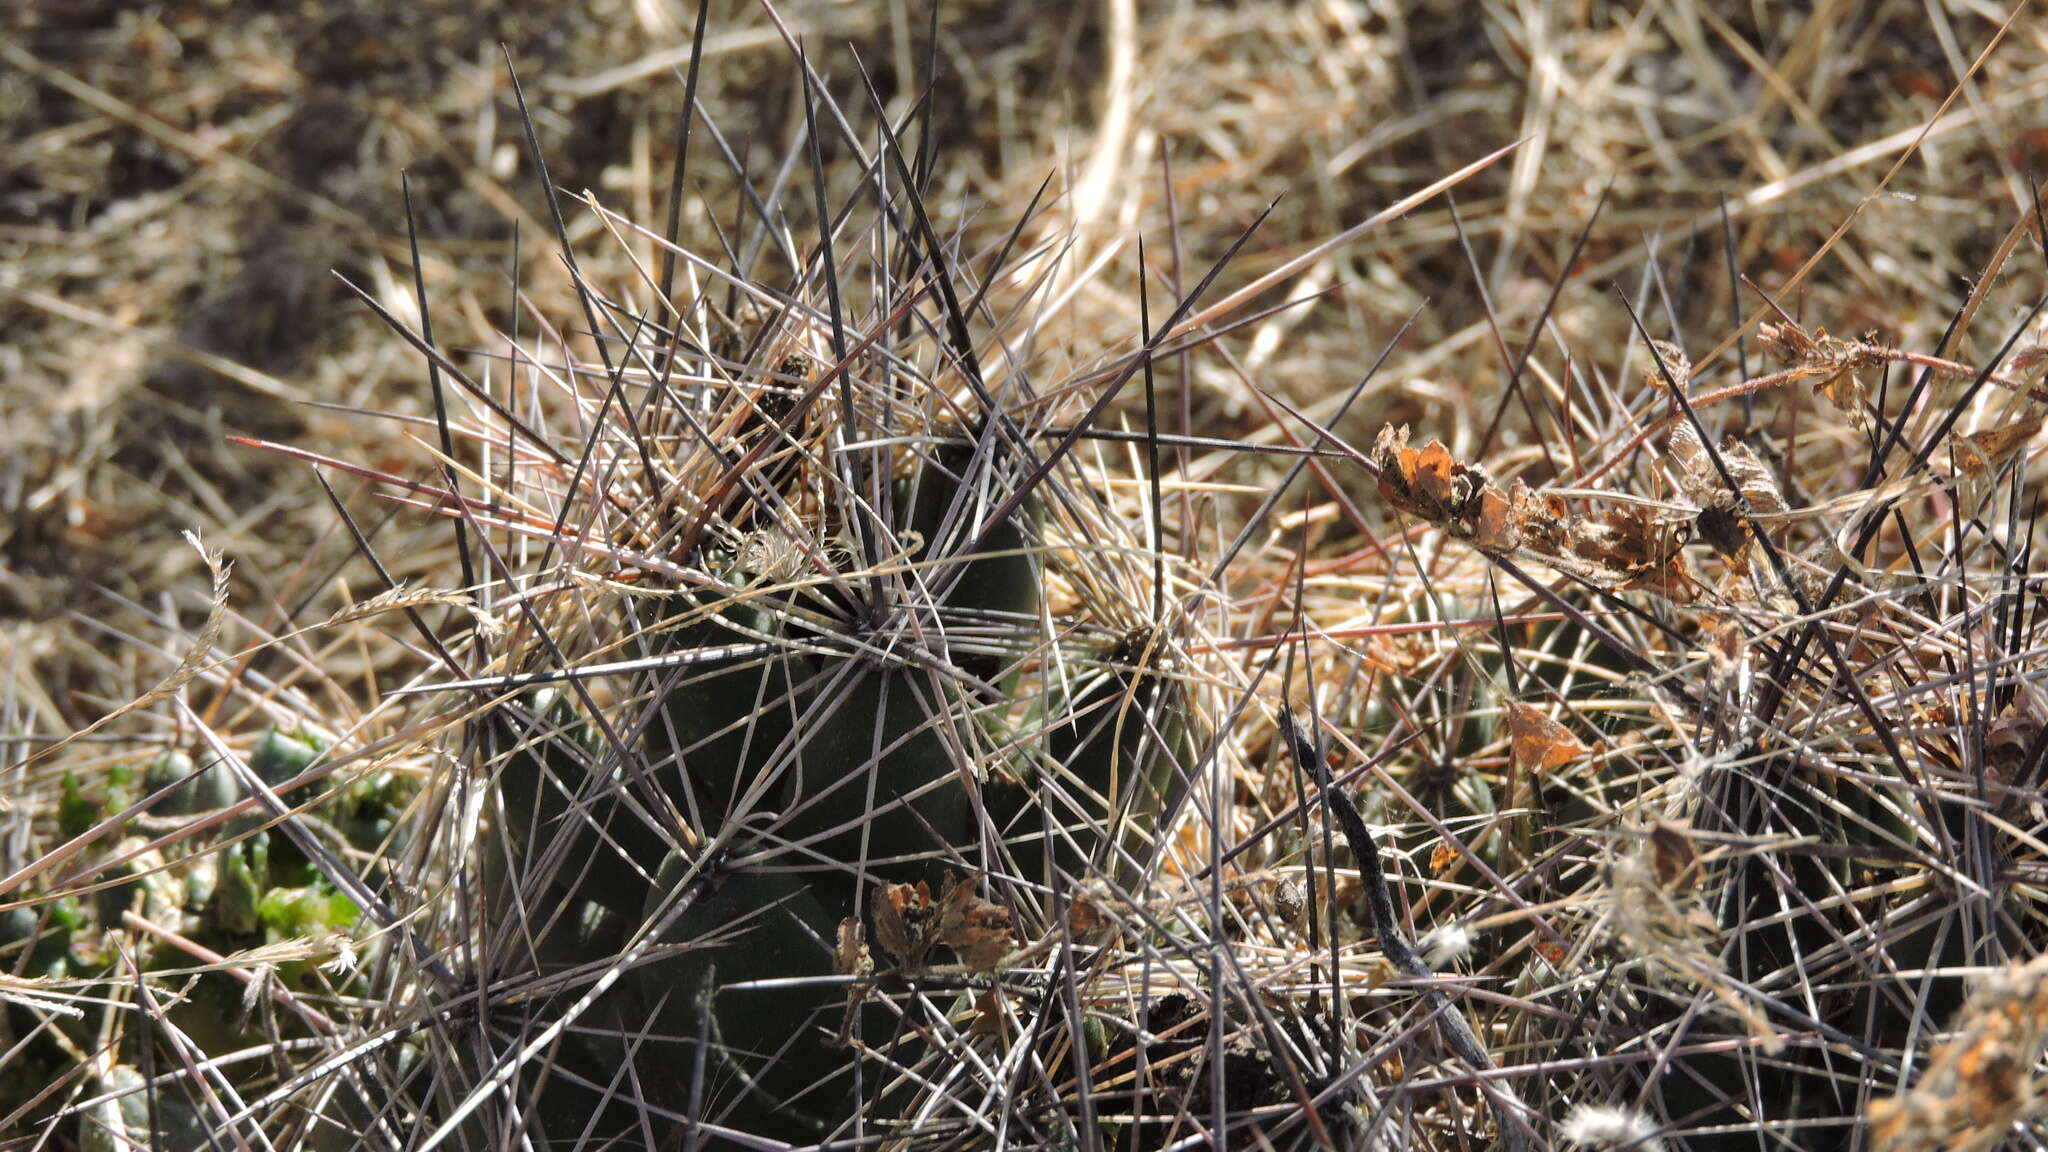 Image of nipple beehive cactus